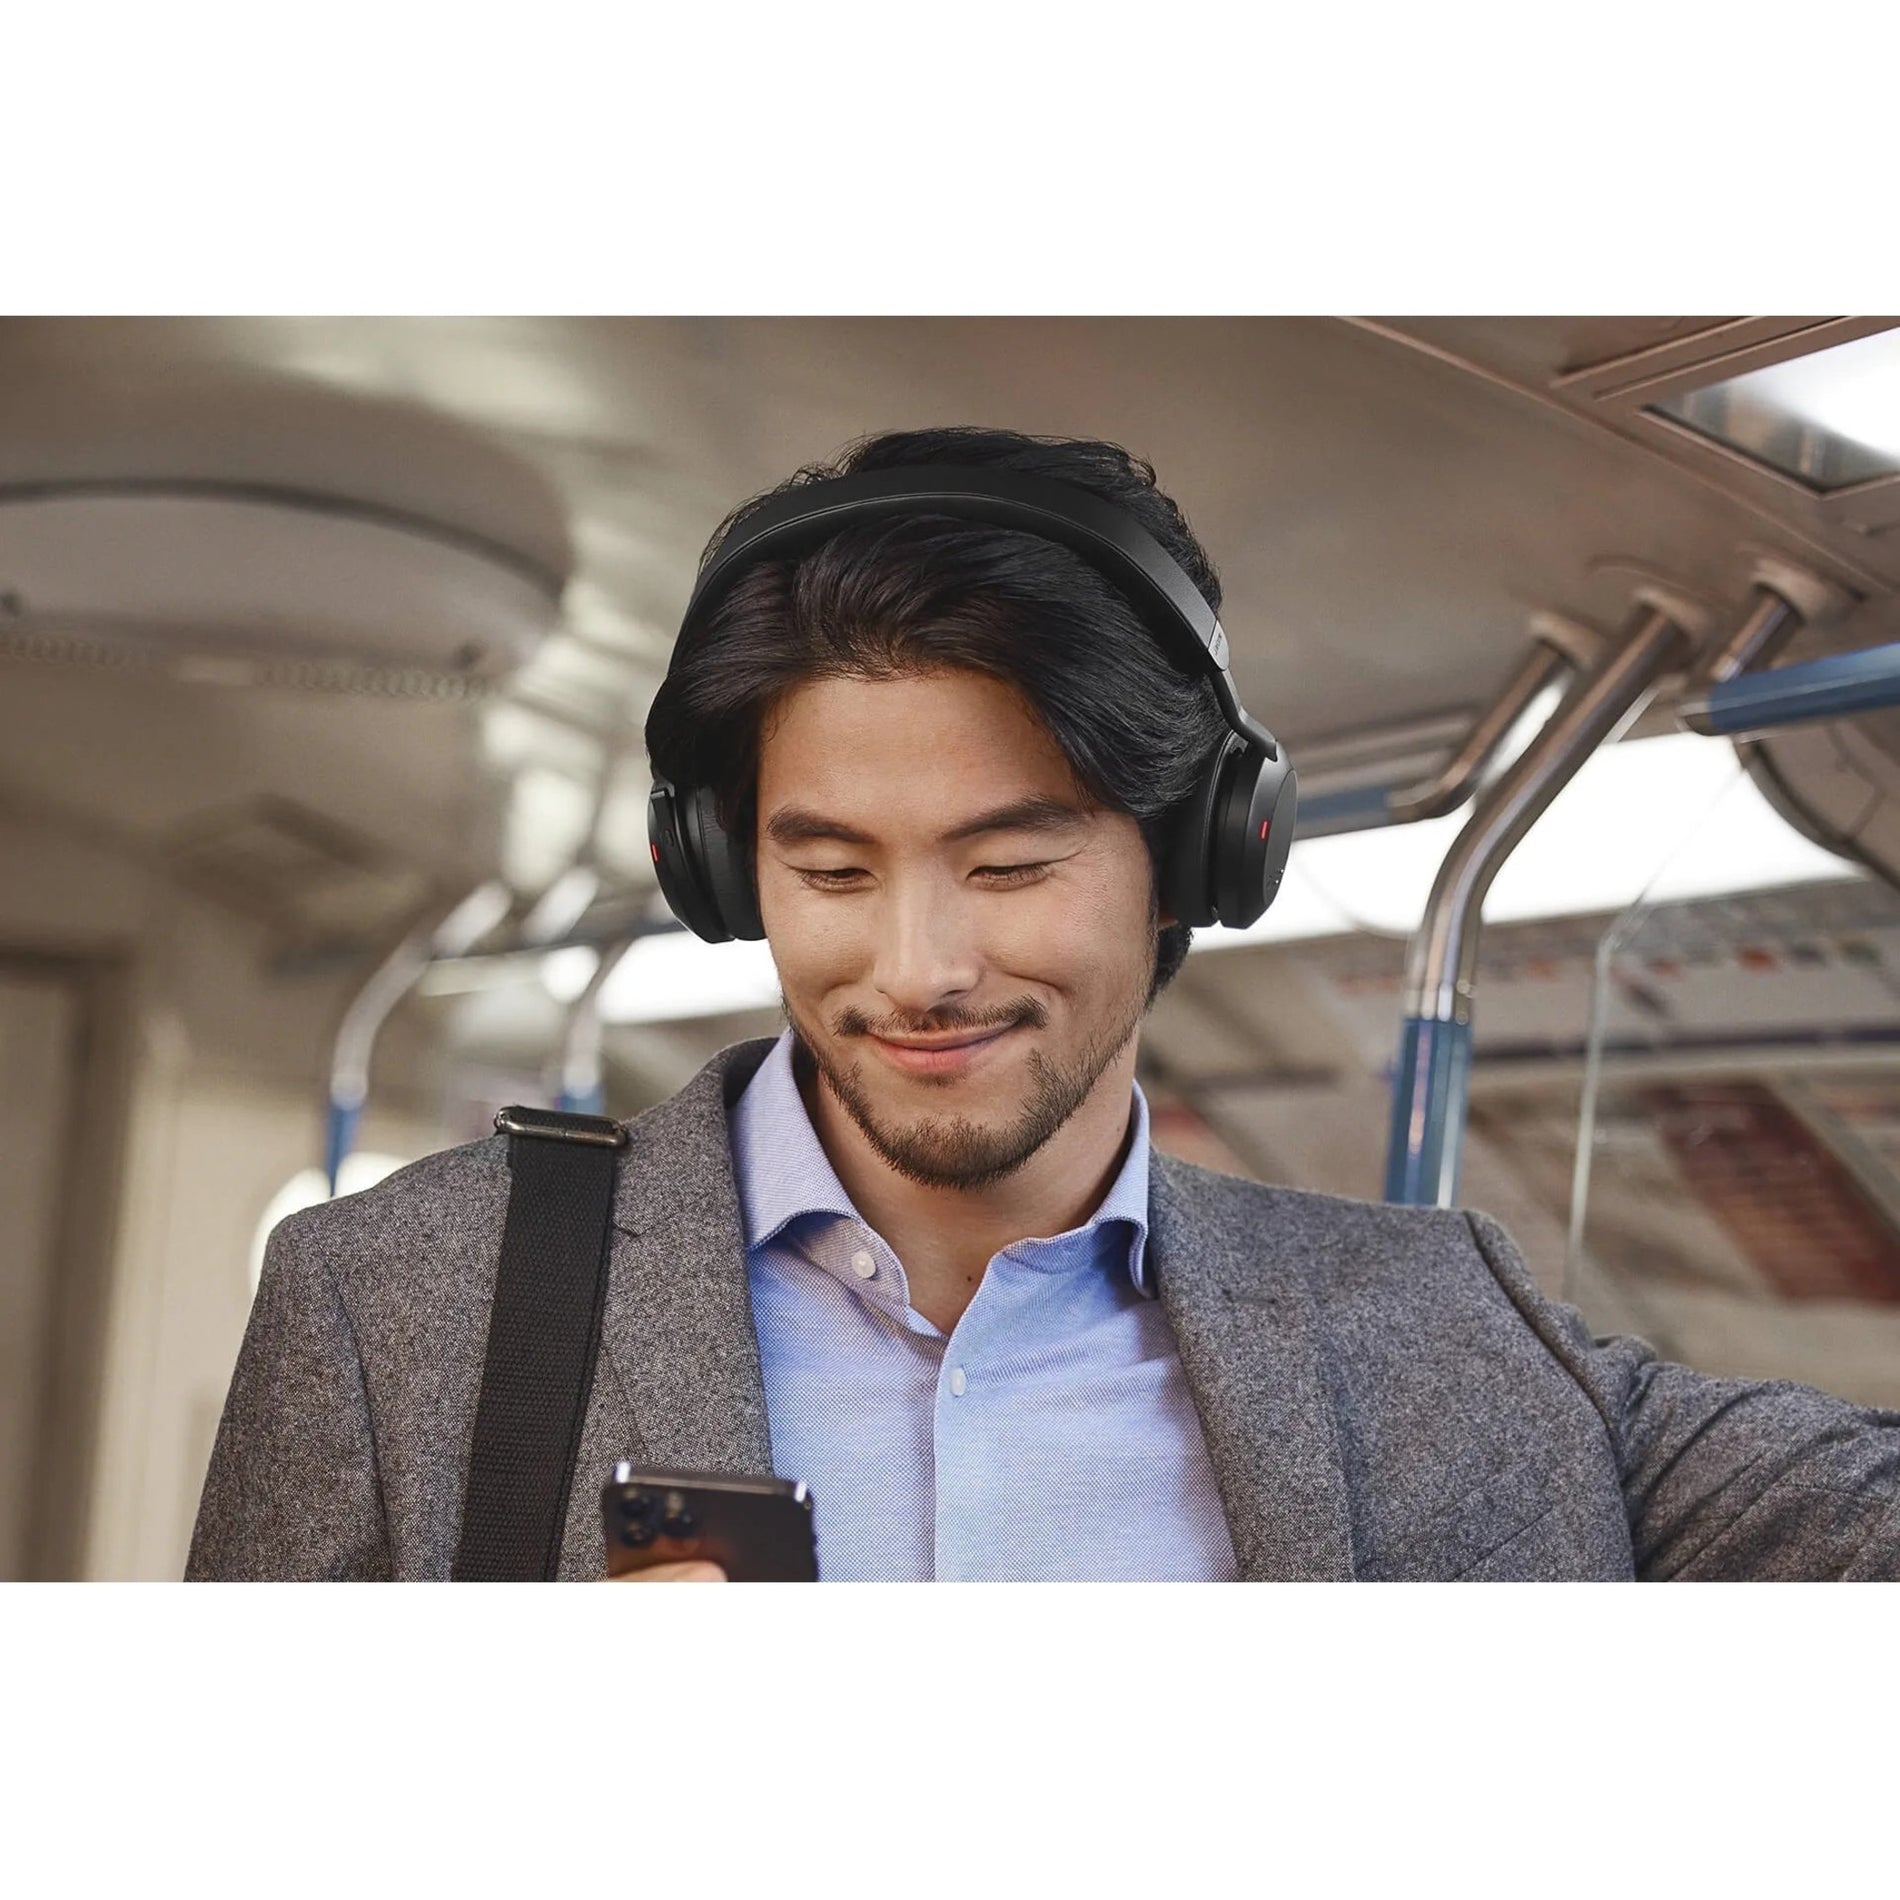 Jabra 27599-989-999 Evolve2 75 Headset, Wireless On-ear Stereo Headset